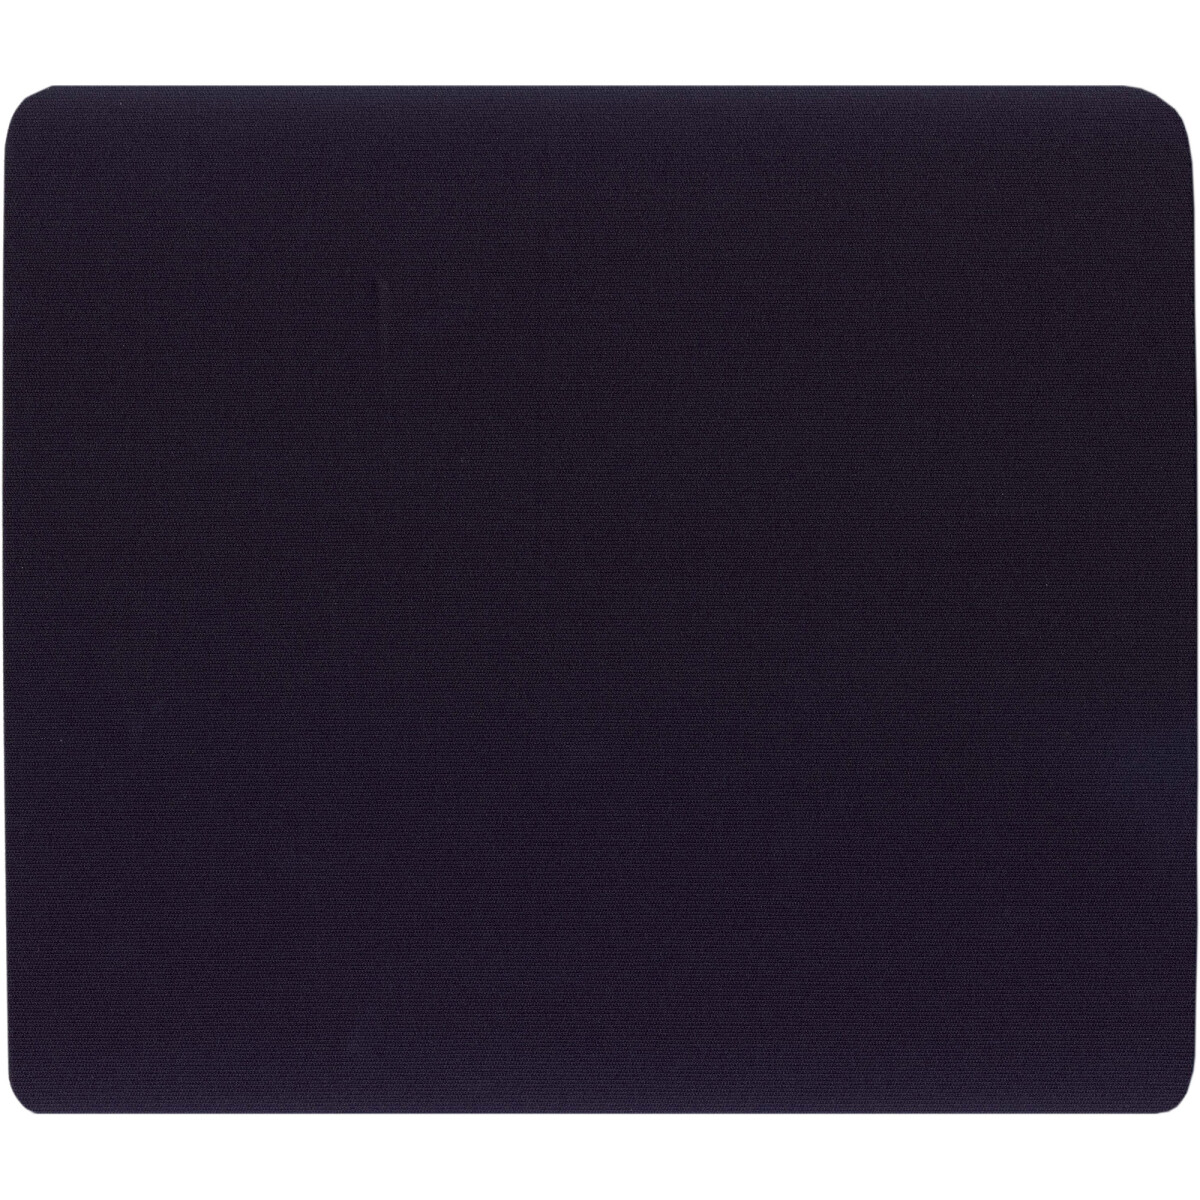 InLine® Mouse pad 250x220x6mm, black